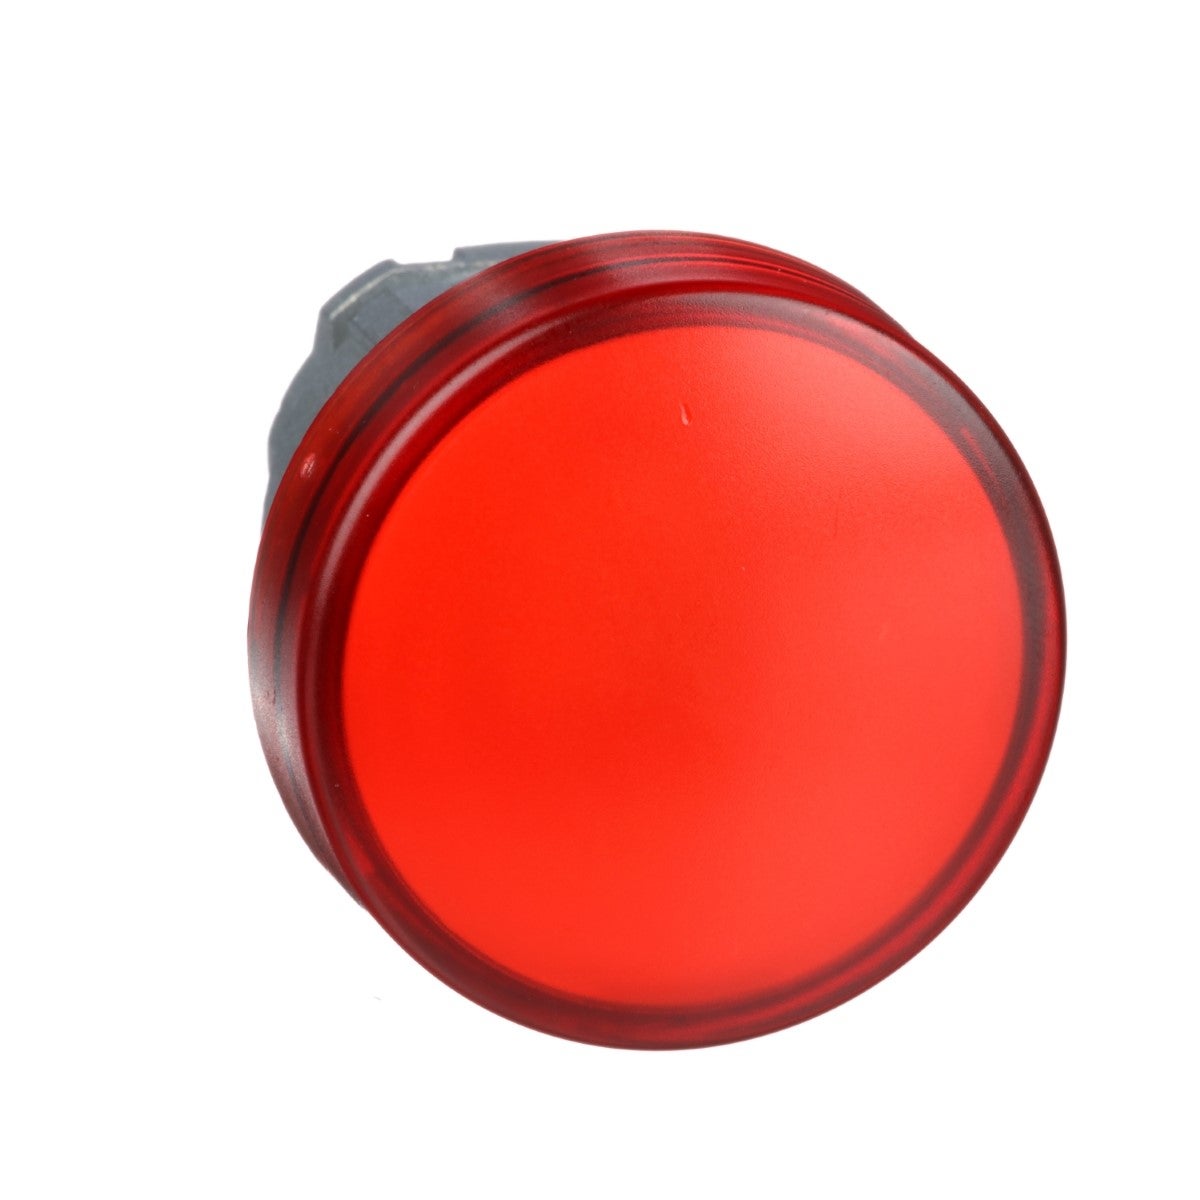 red pilot light head Ã˜22 with plain lens for integral LED